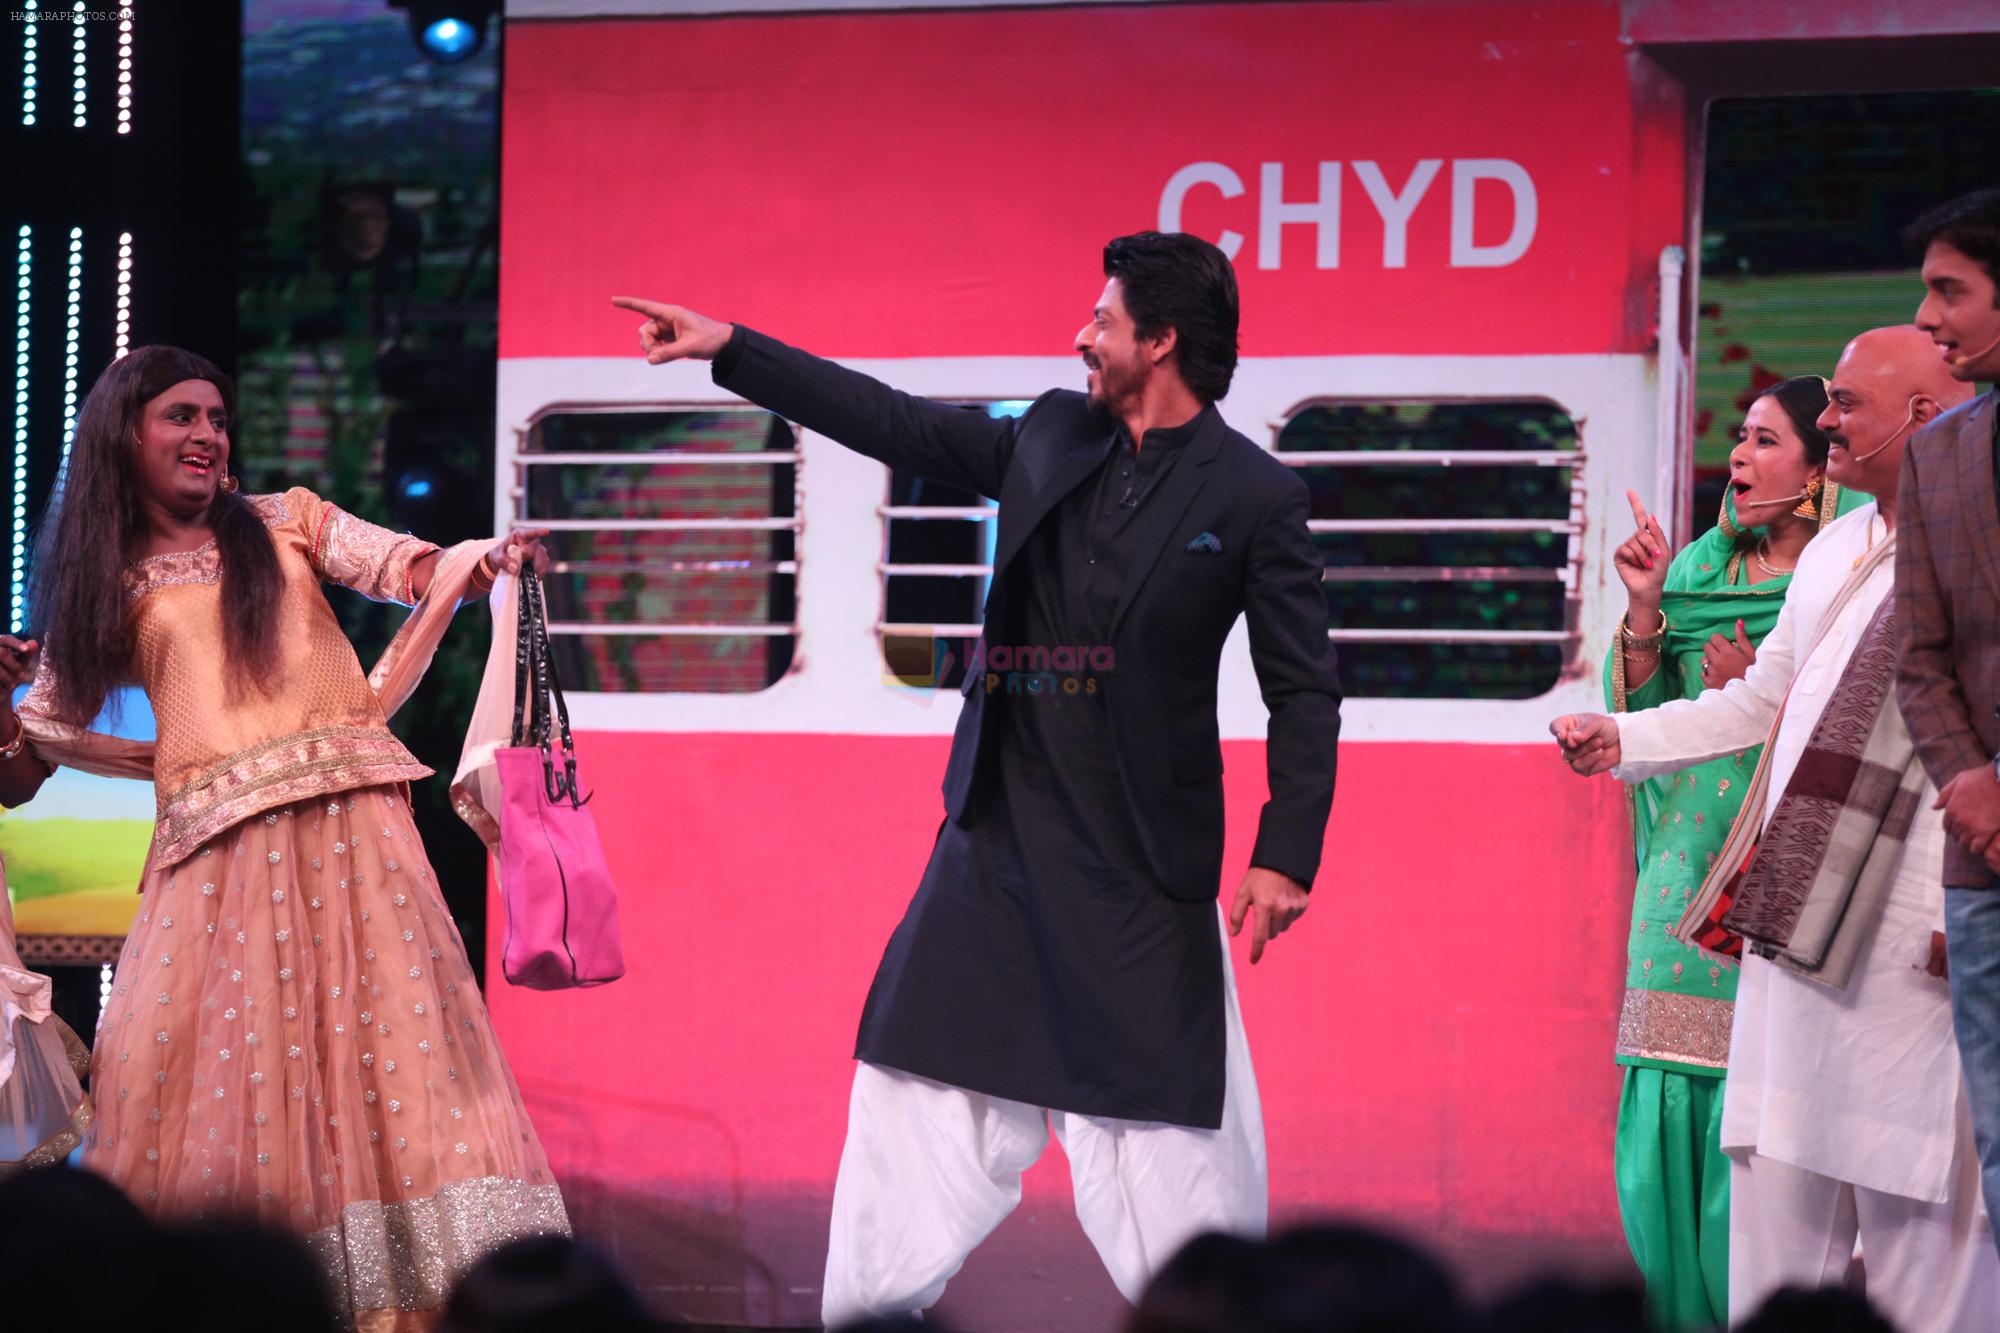 Shahrukh Khan at Marathi event Chala Hawa Yeu Dya on 9th April 2016